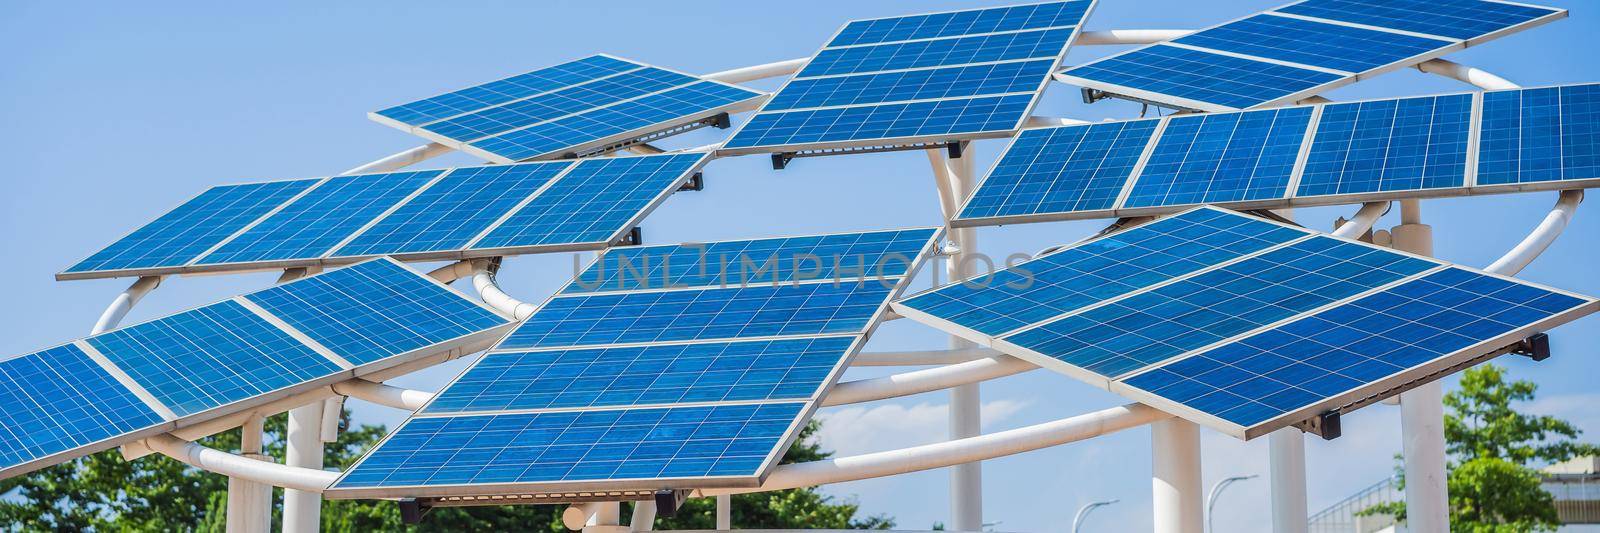 Power plant using renewable solar energy with sun BANNER, LONG FORMAT by galitskaya